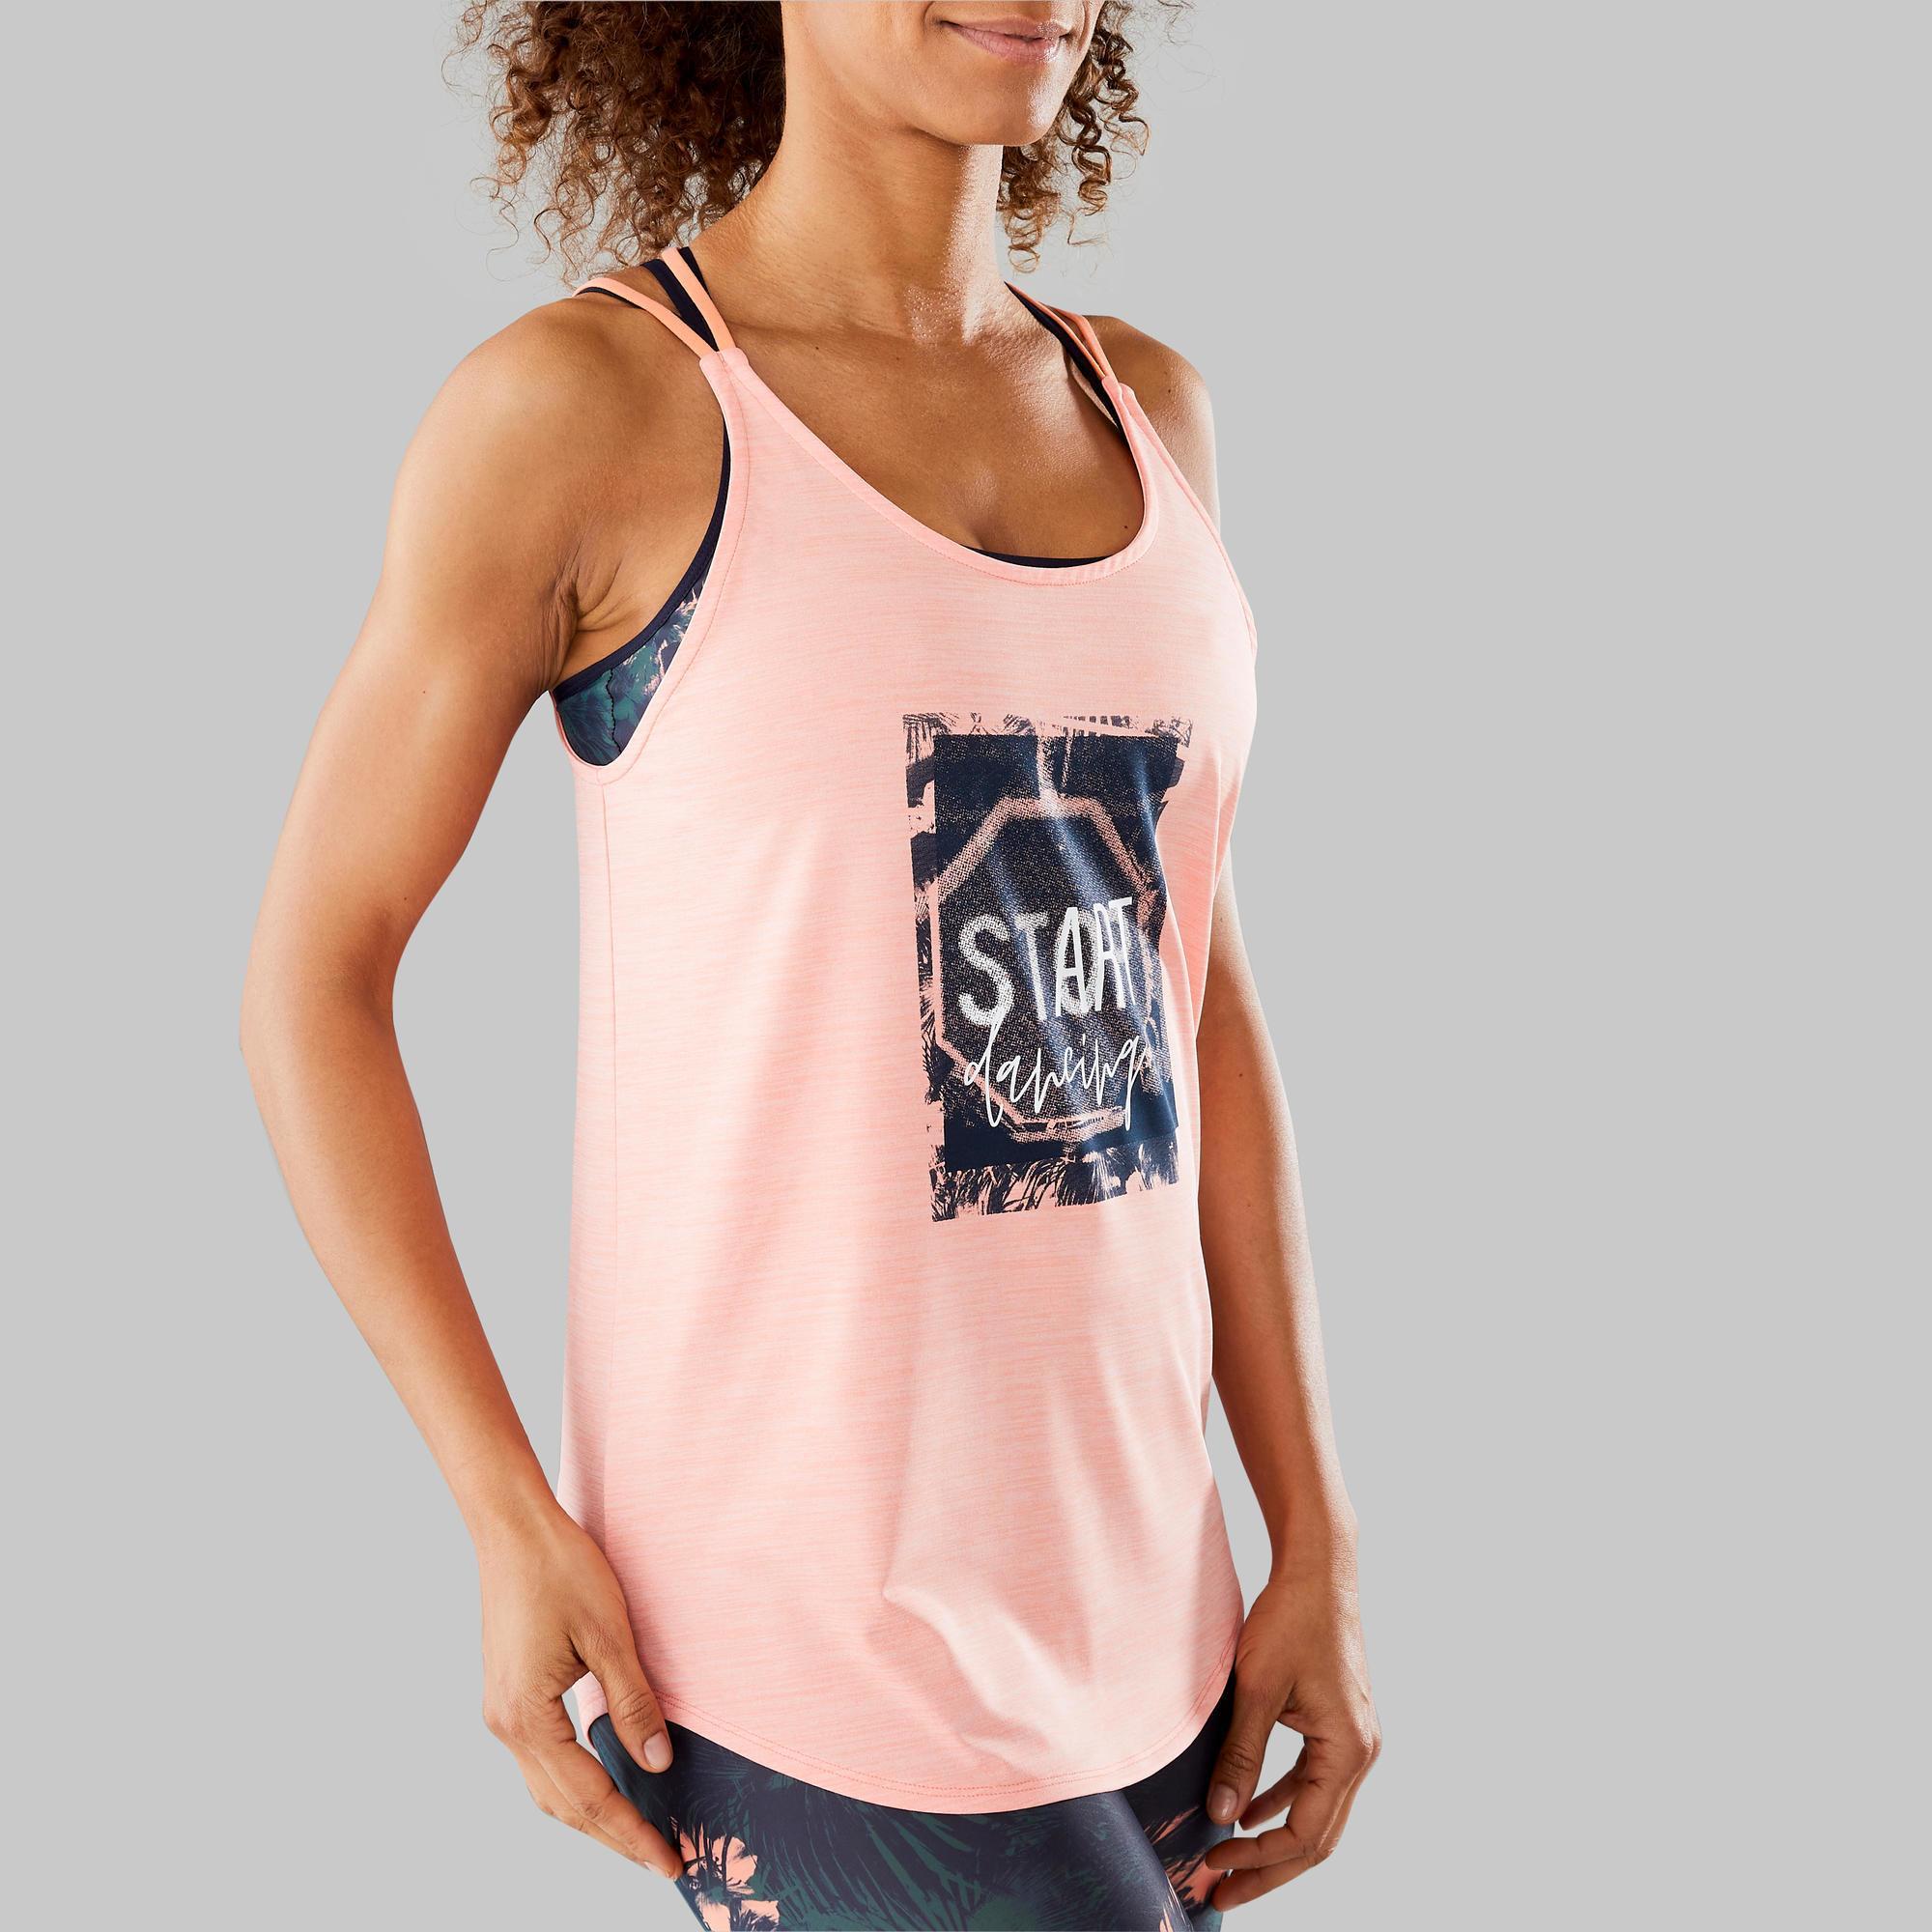 Camiseta Fitness Mujer, Buy Hotsell, 52% OFF,